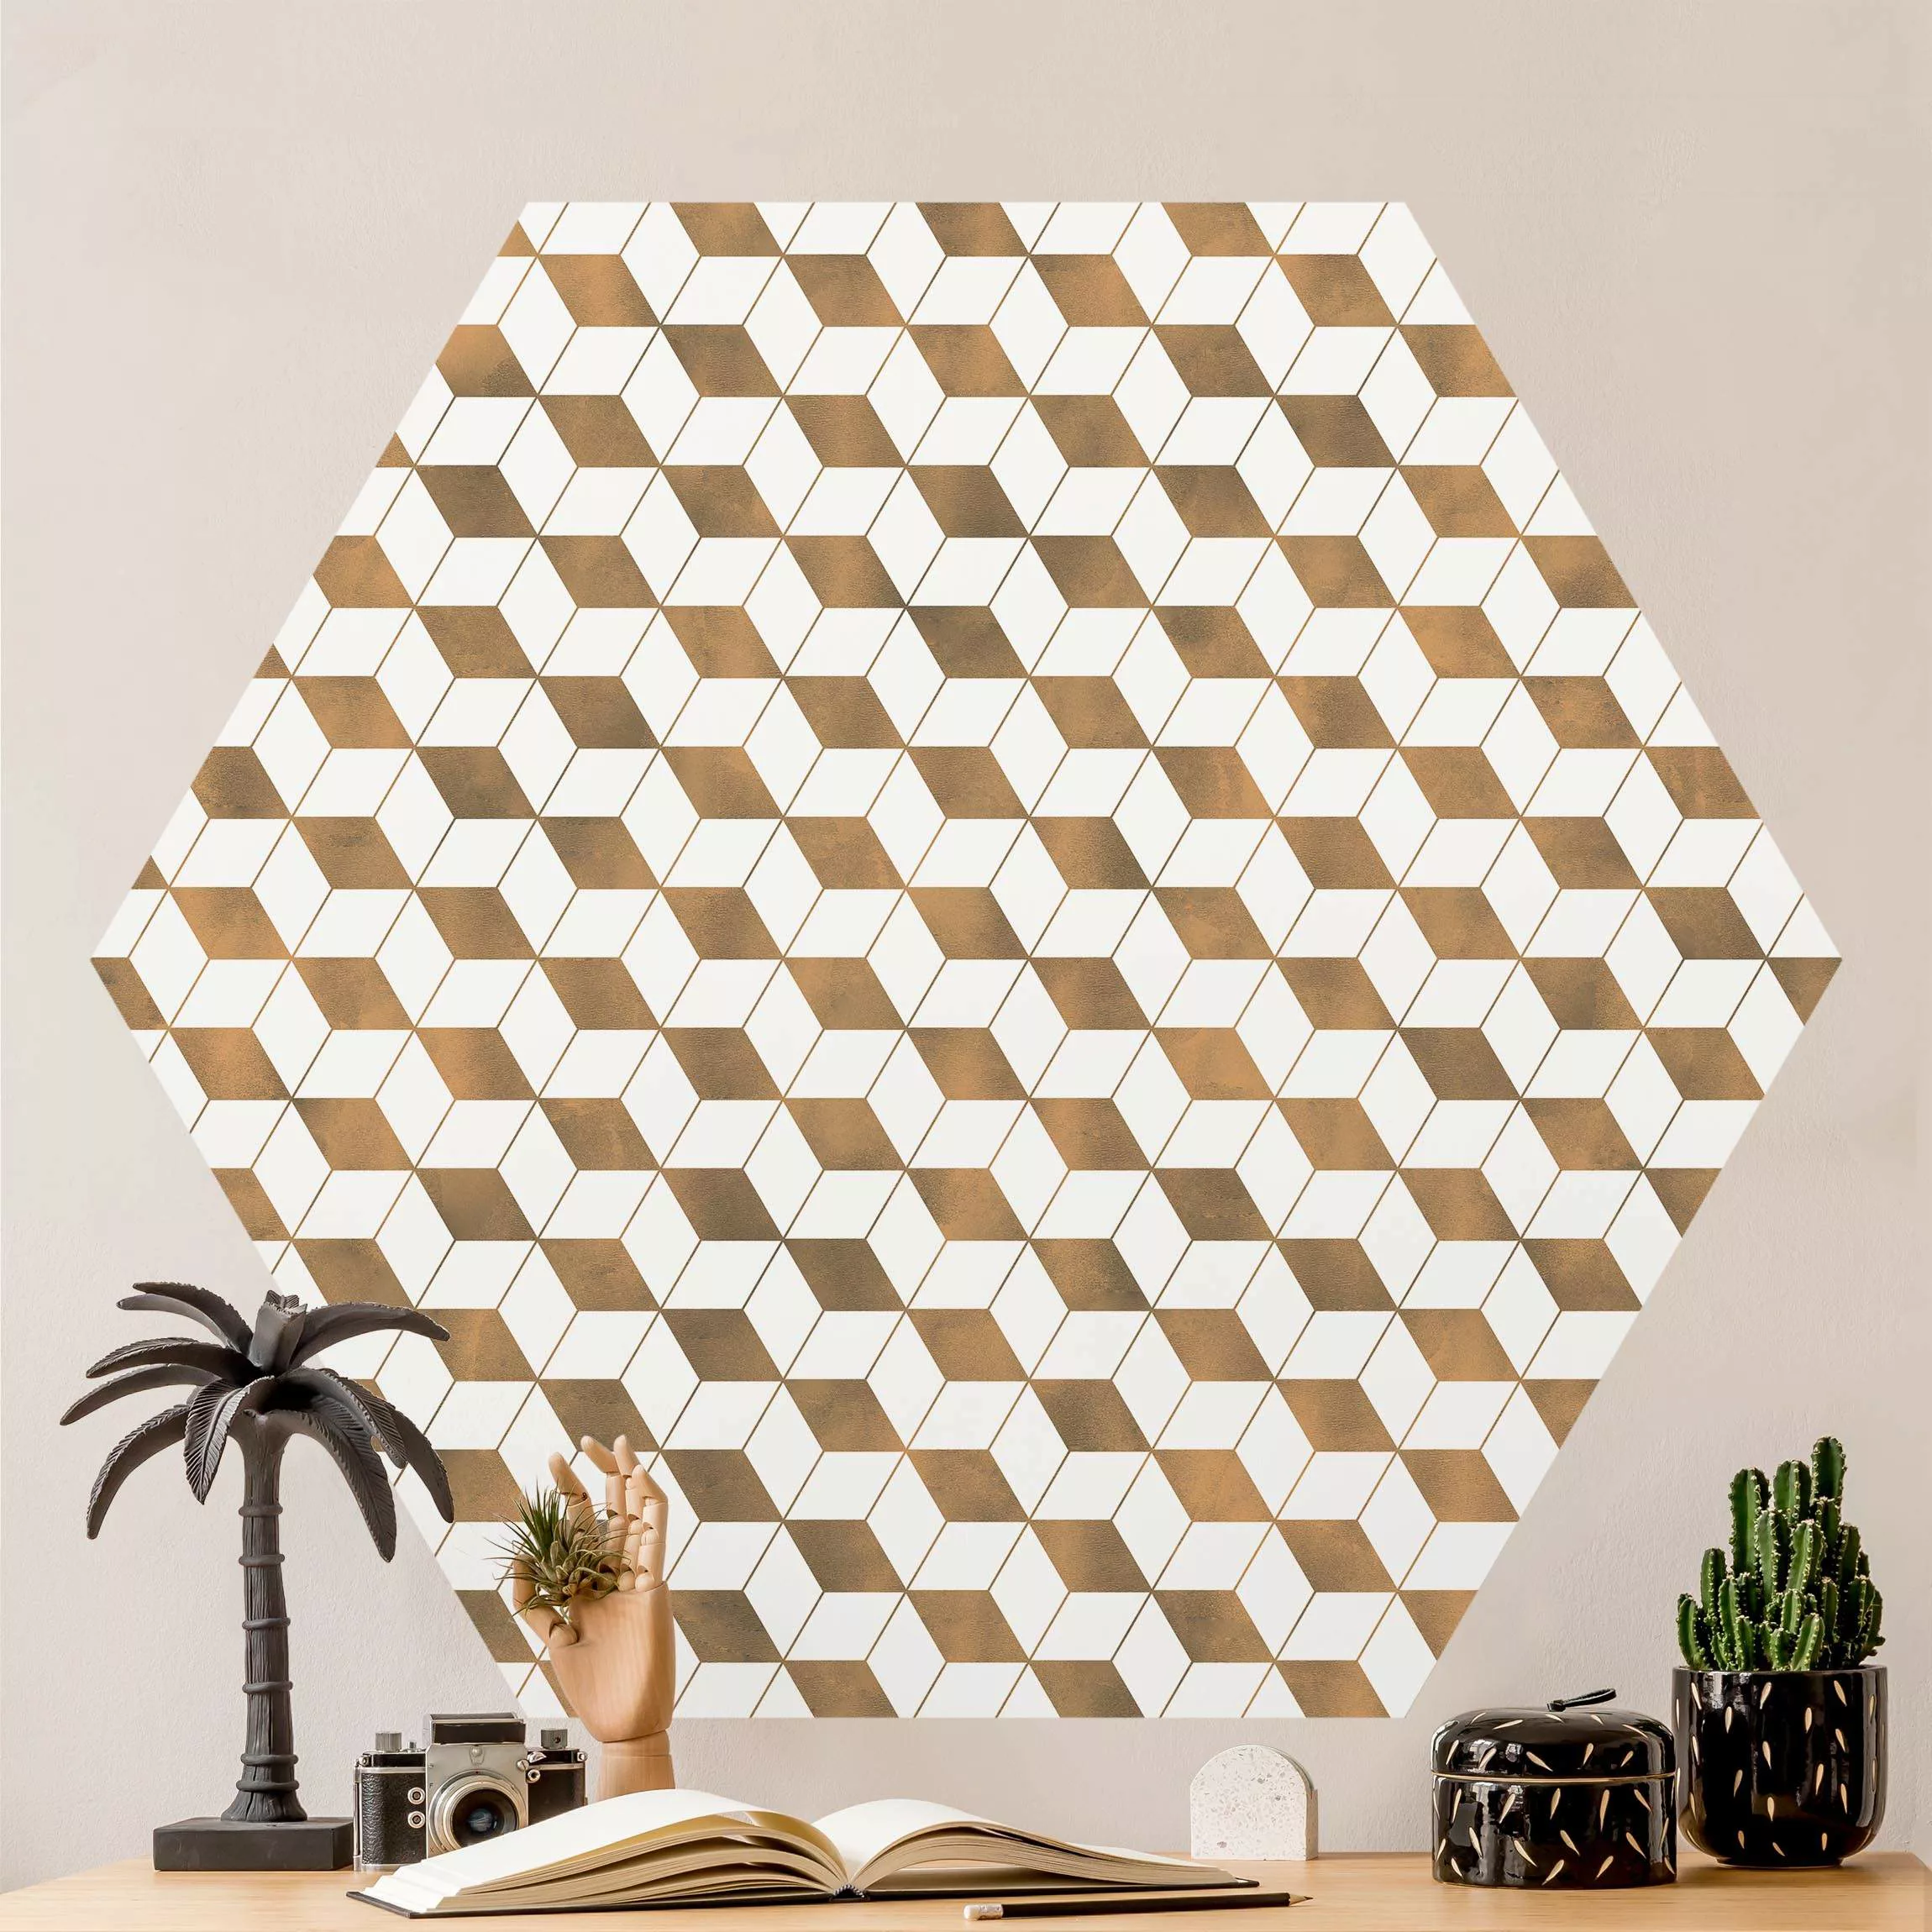 Hexagon Mustertapete selbstklebend Würfel Muster in 3D Gold günstig online kaufen